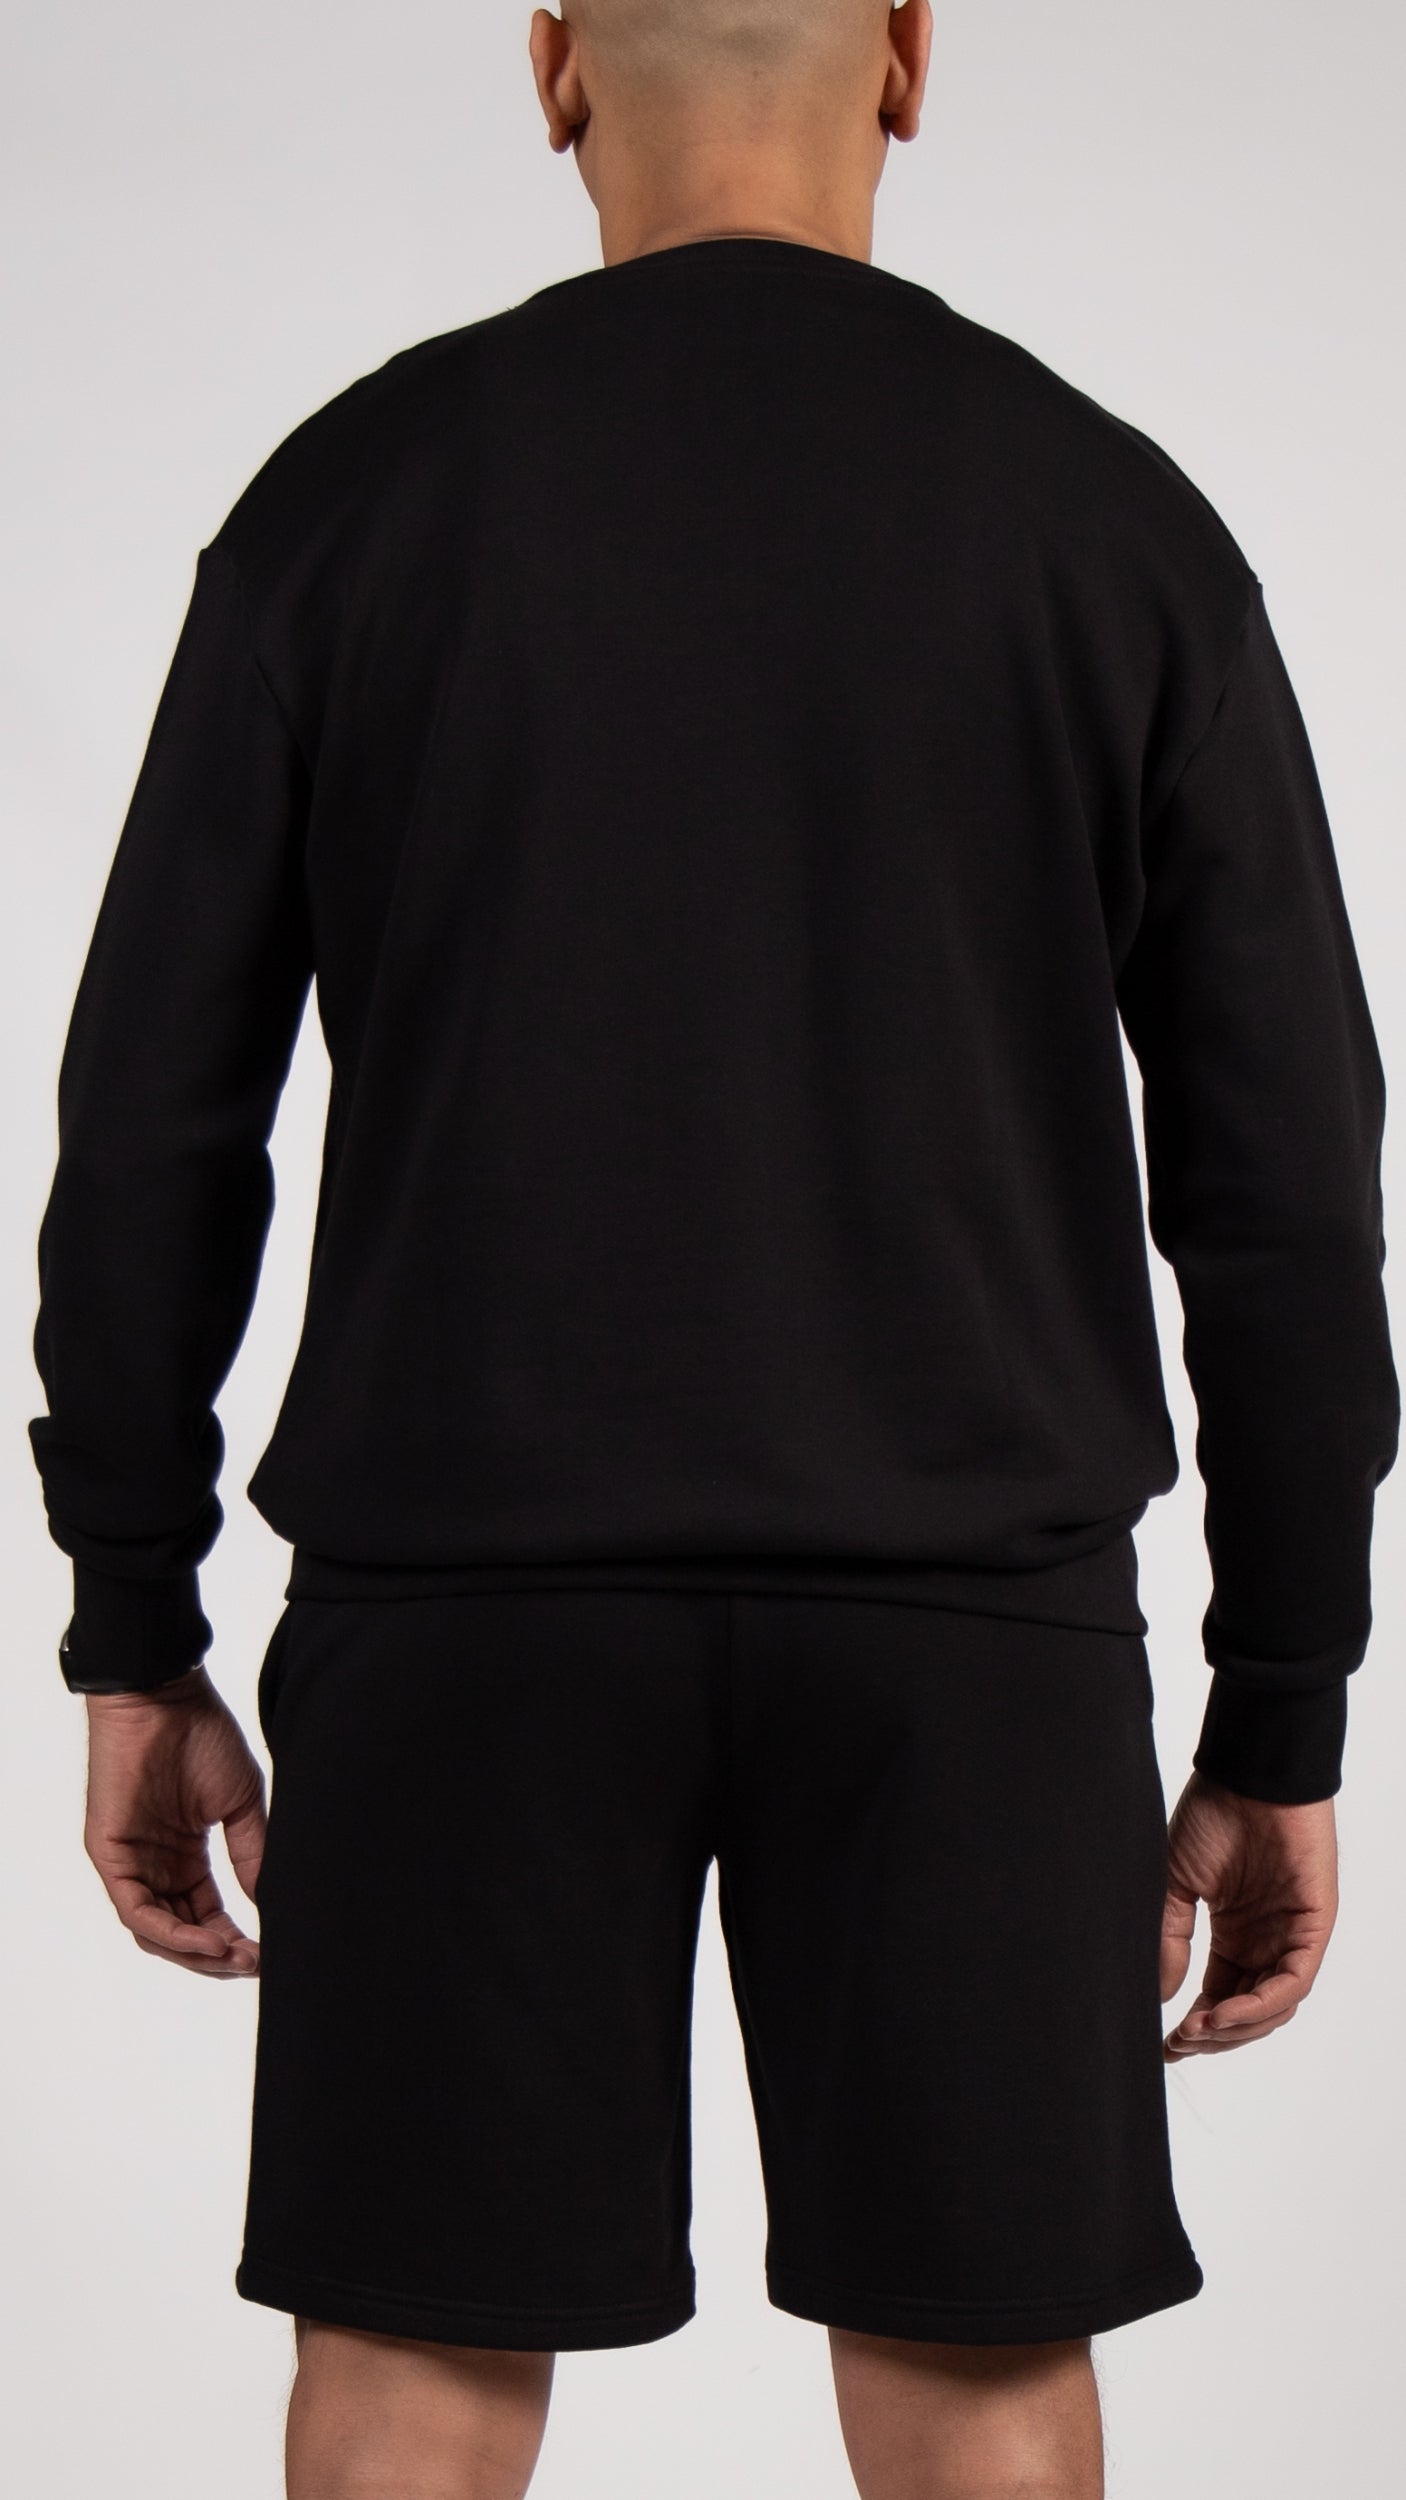 MYBRAND Embosed Statement Sweater Black | BLACK